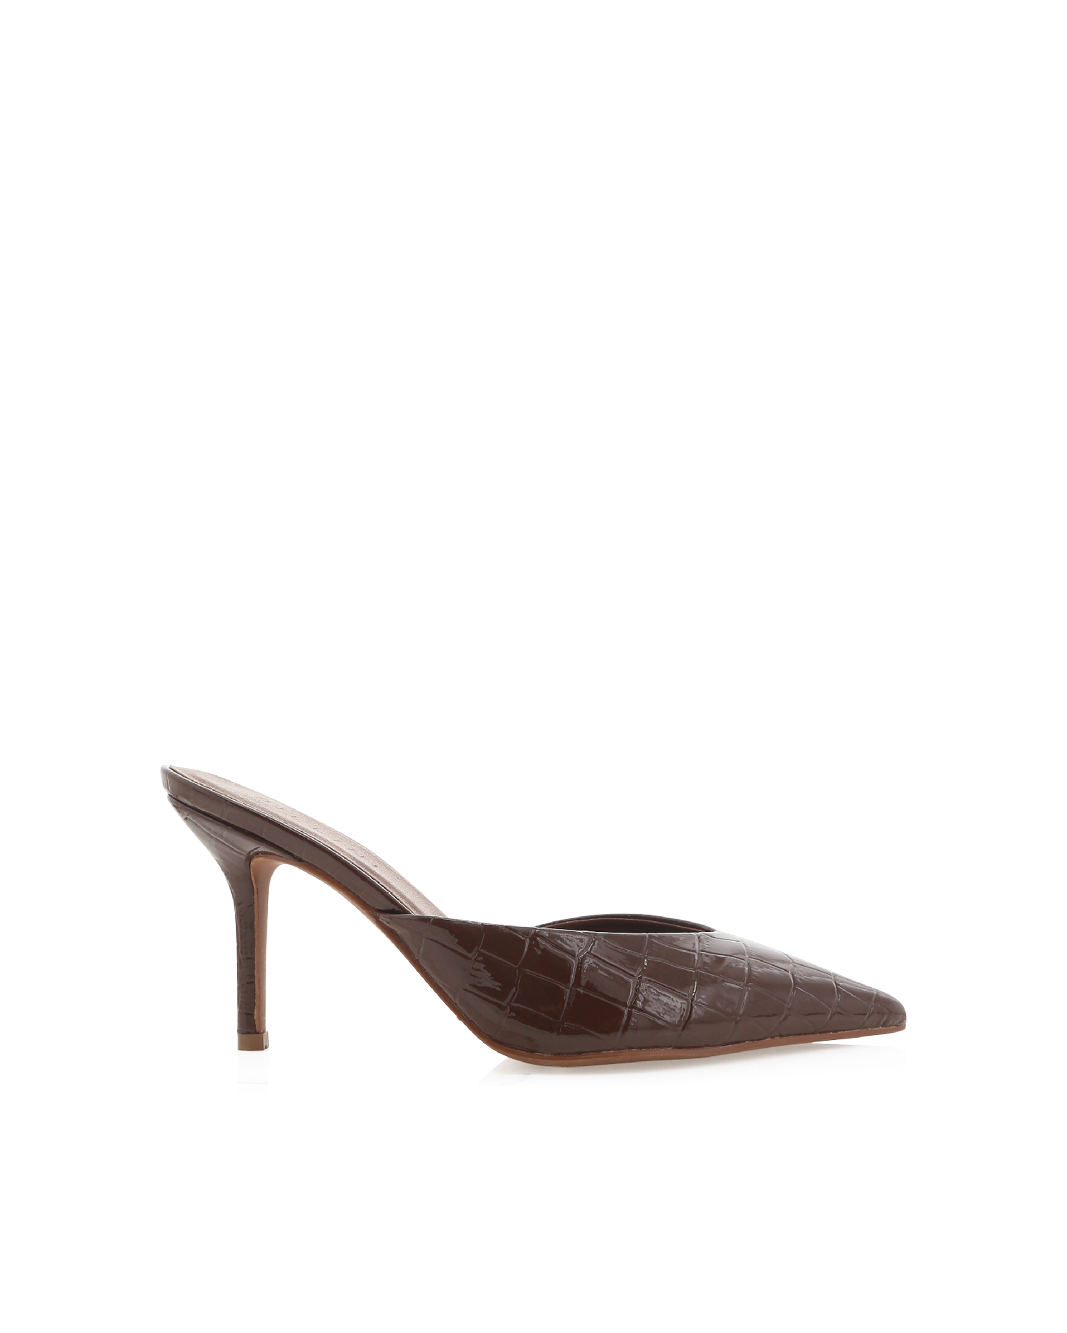 KAREY - CHOCOLATE PATENT CROC-Heels-Billini-Billini